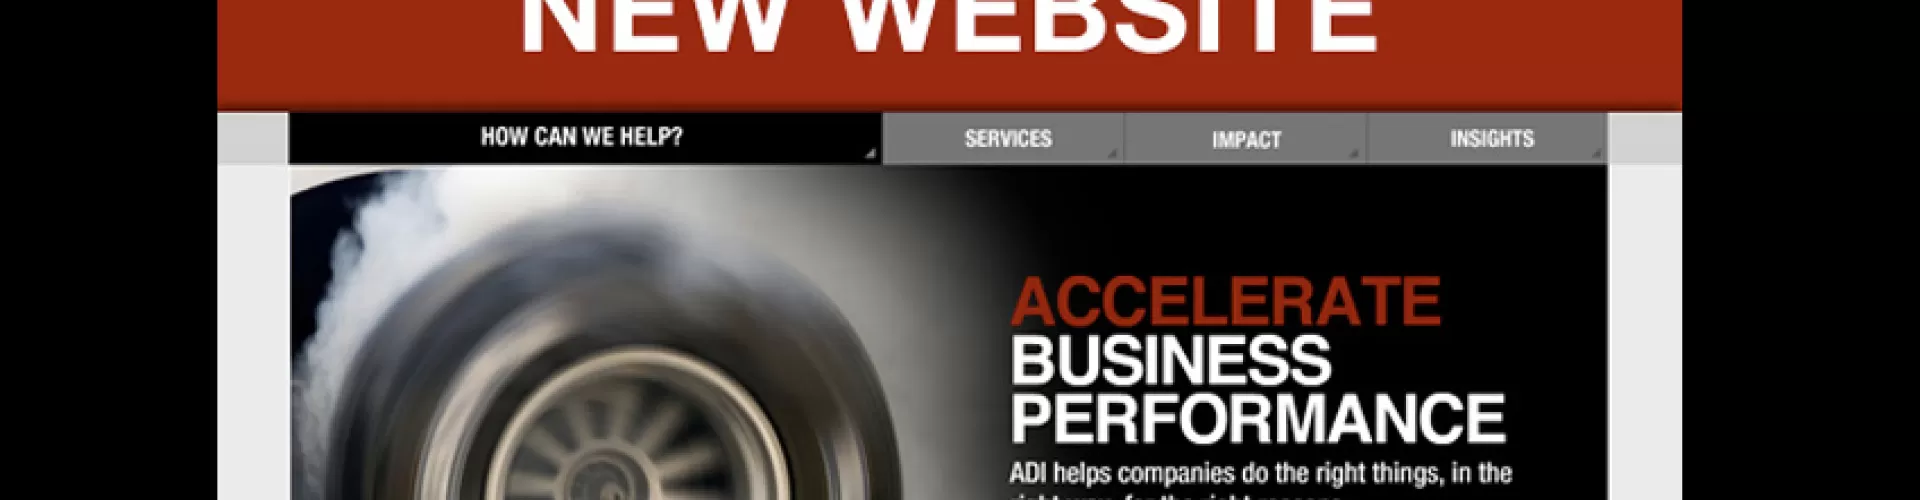 ADI launches new website